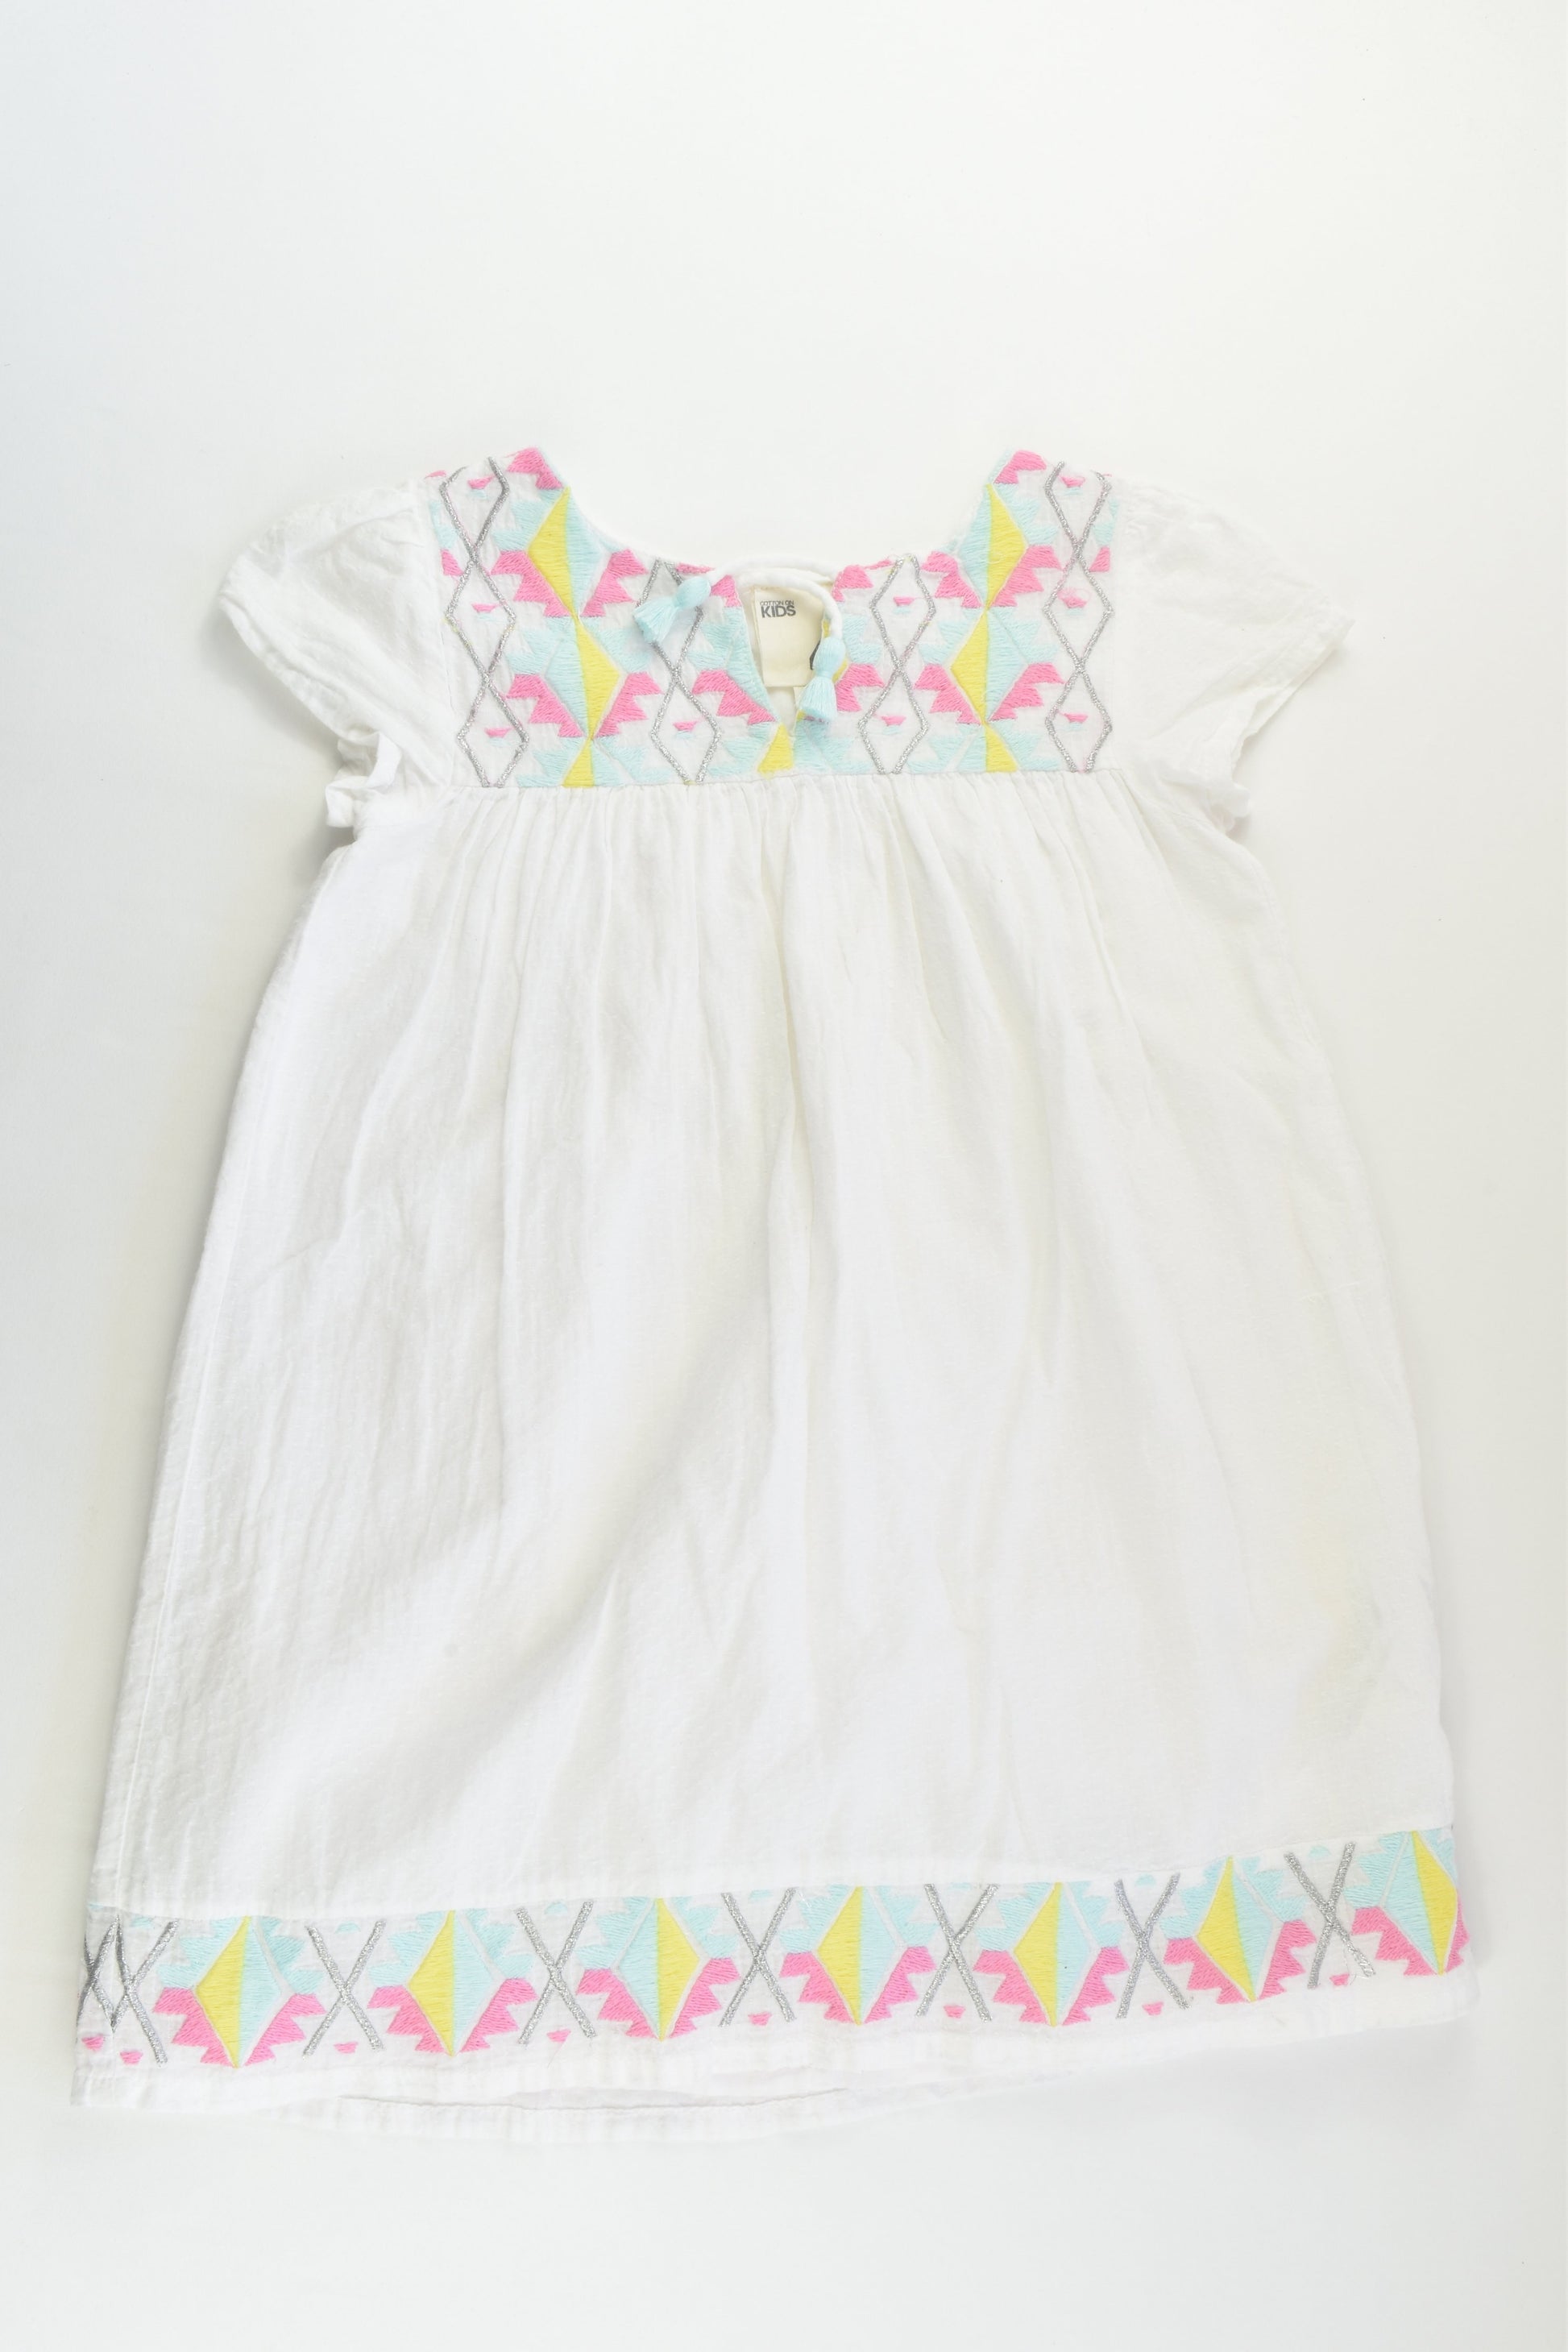 Cotton On Kids Size 4 Lined Dress